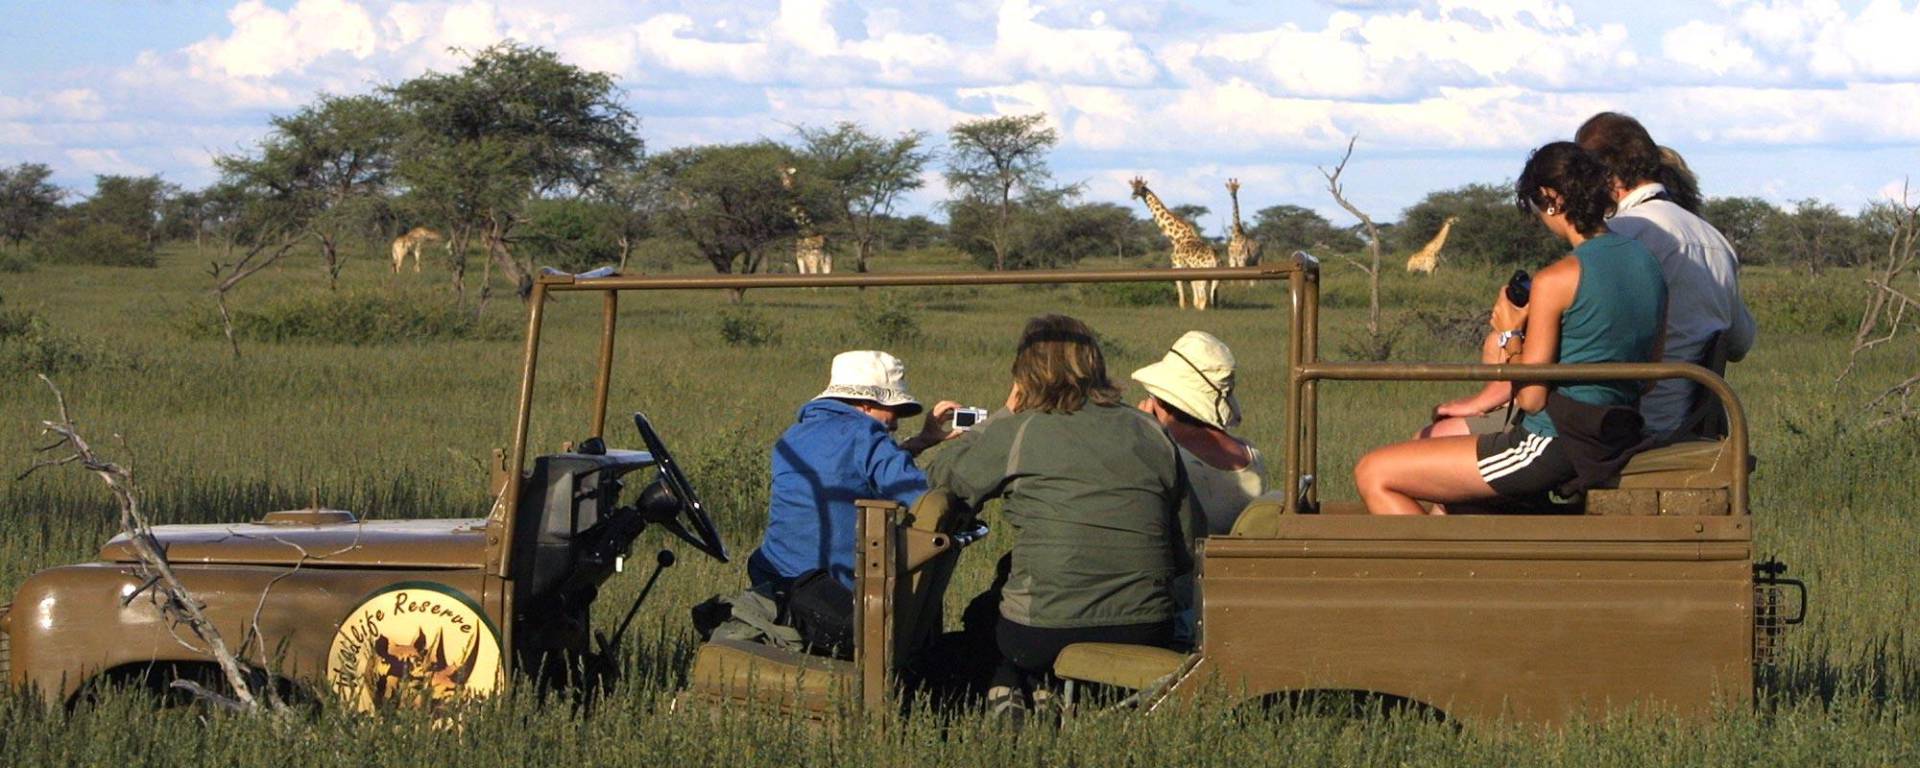 Giraffe observation at a Kuzikus nature drive